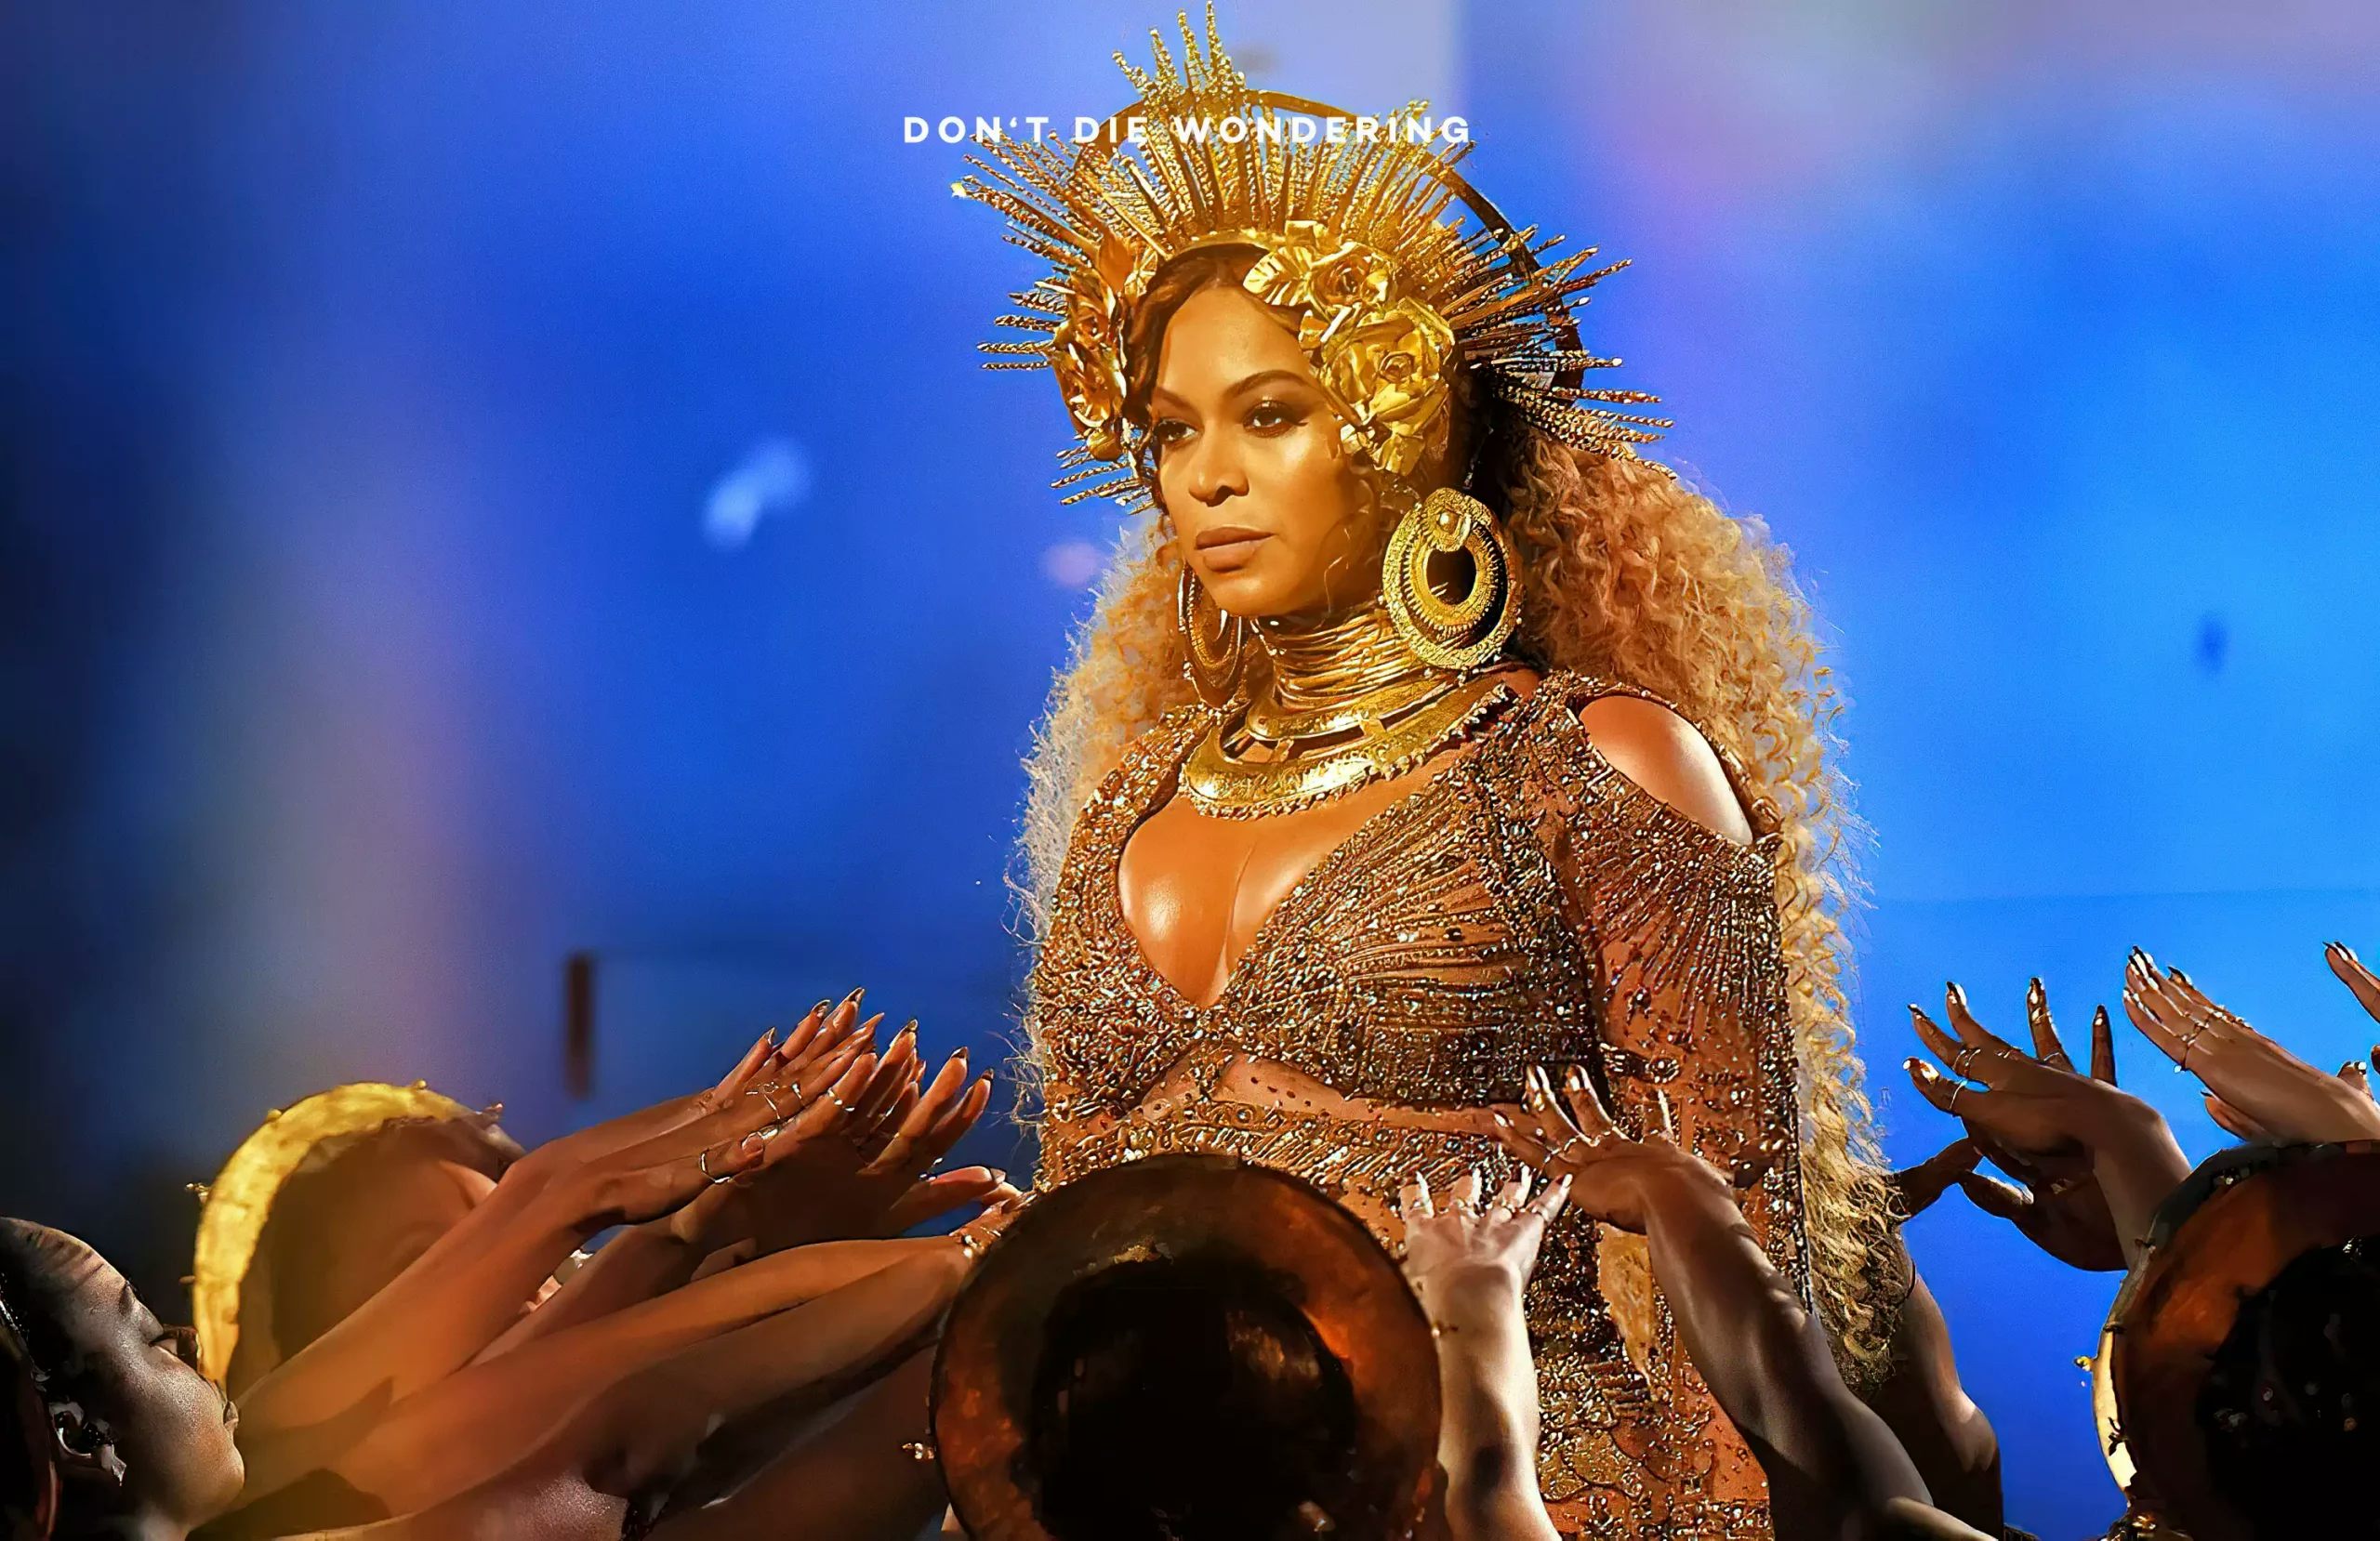 Beyoncé drops new disco-inspired track “Break My Soul”